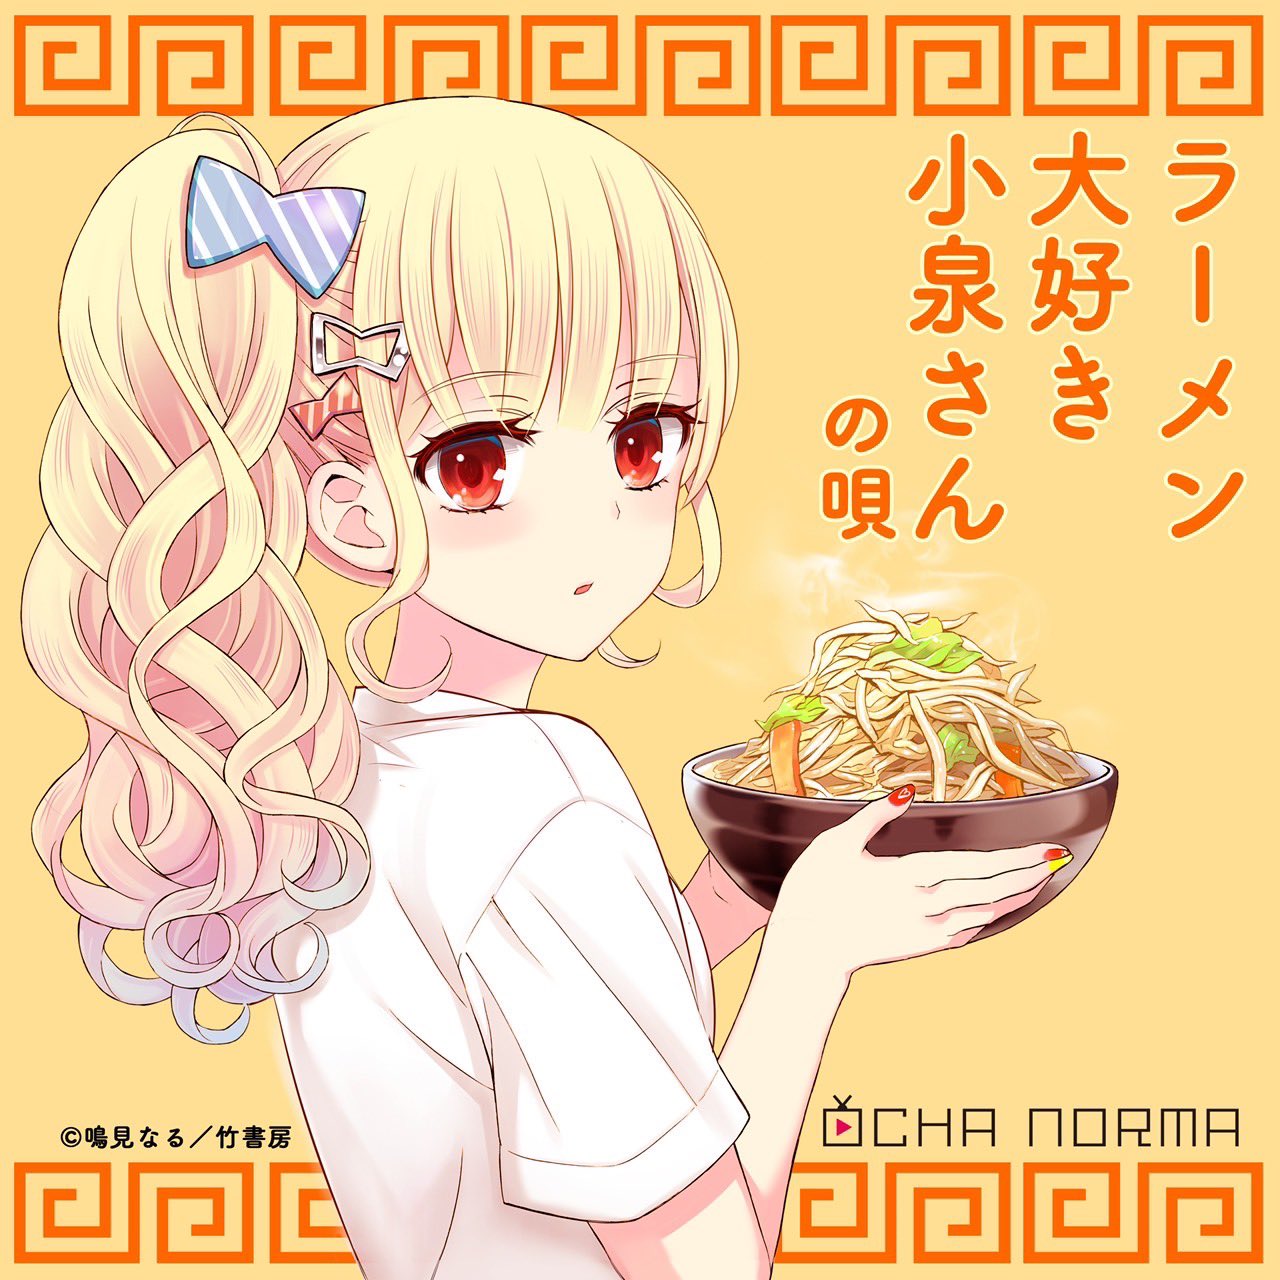 Qoo News] Mobile cooking simulation Ramen Daisuki Koizumi-san: Mashi Mashi  is out